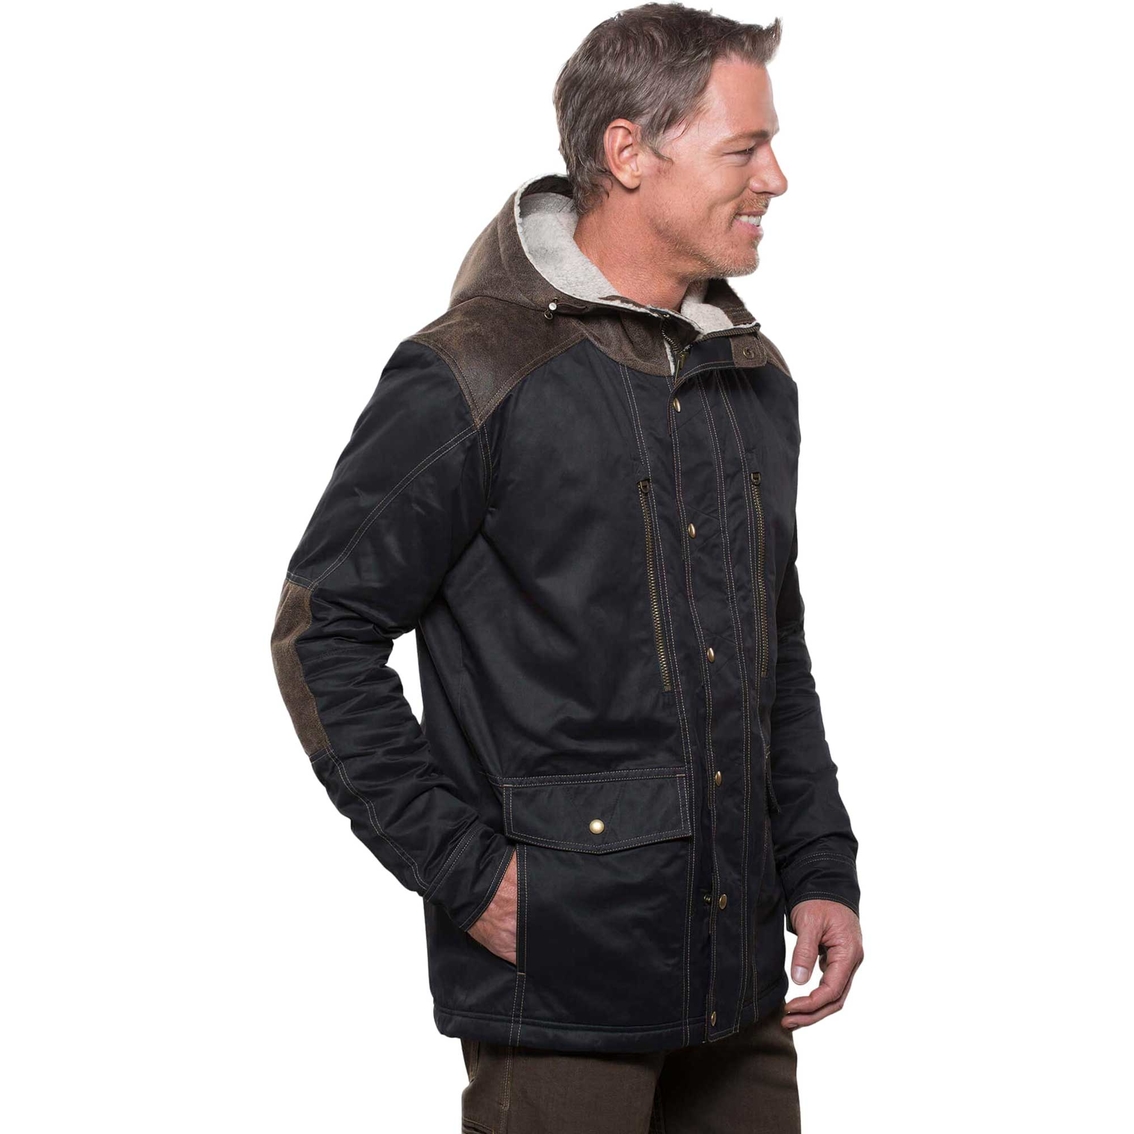 Kuhl Arktik Jacket, Jackets, Clothing & Accessories